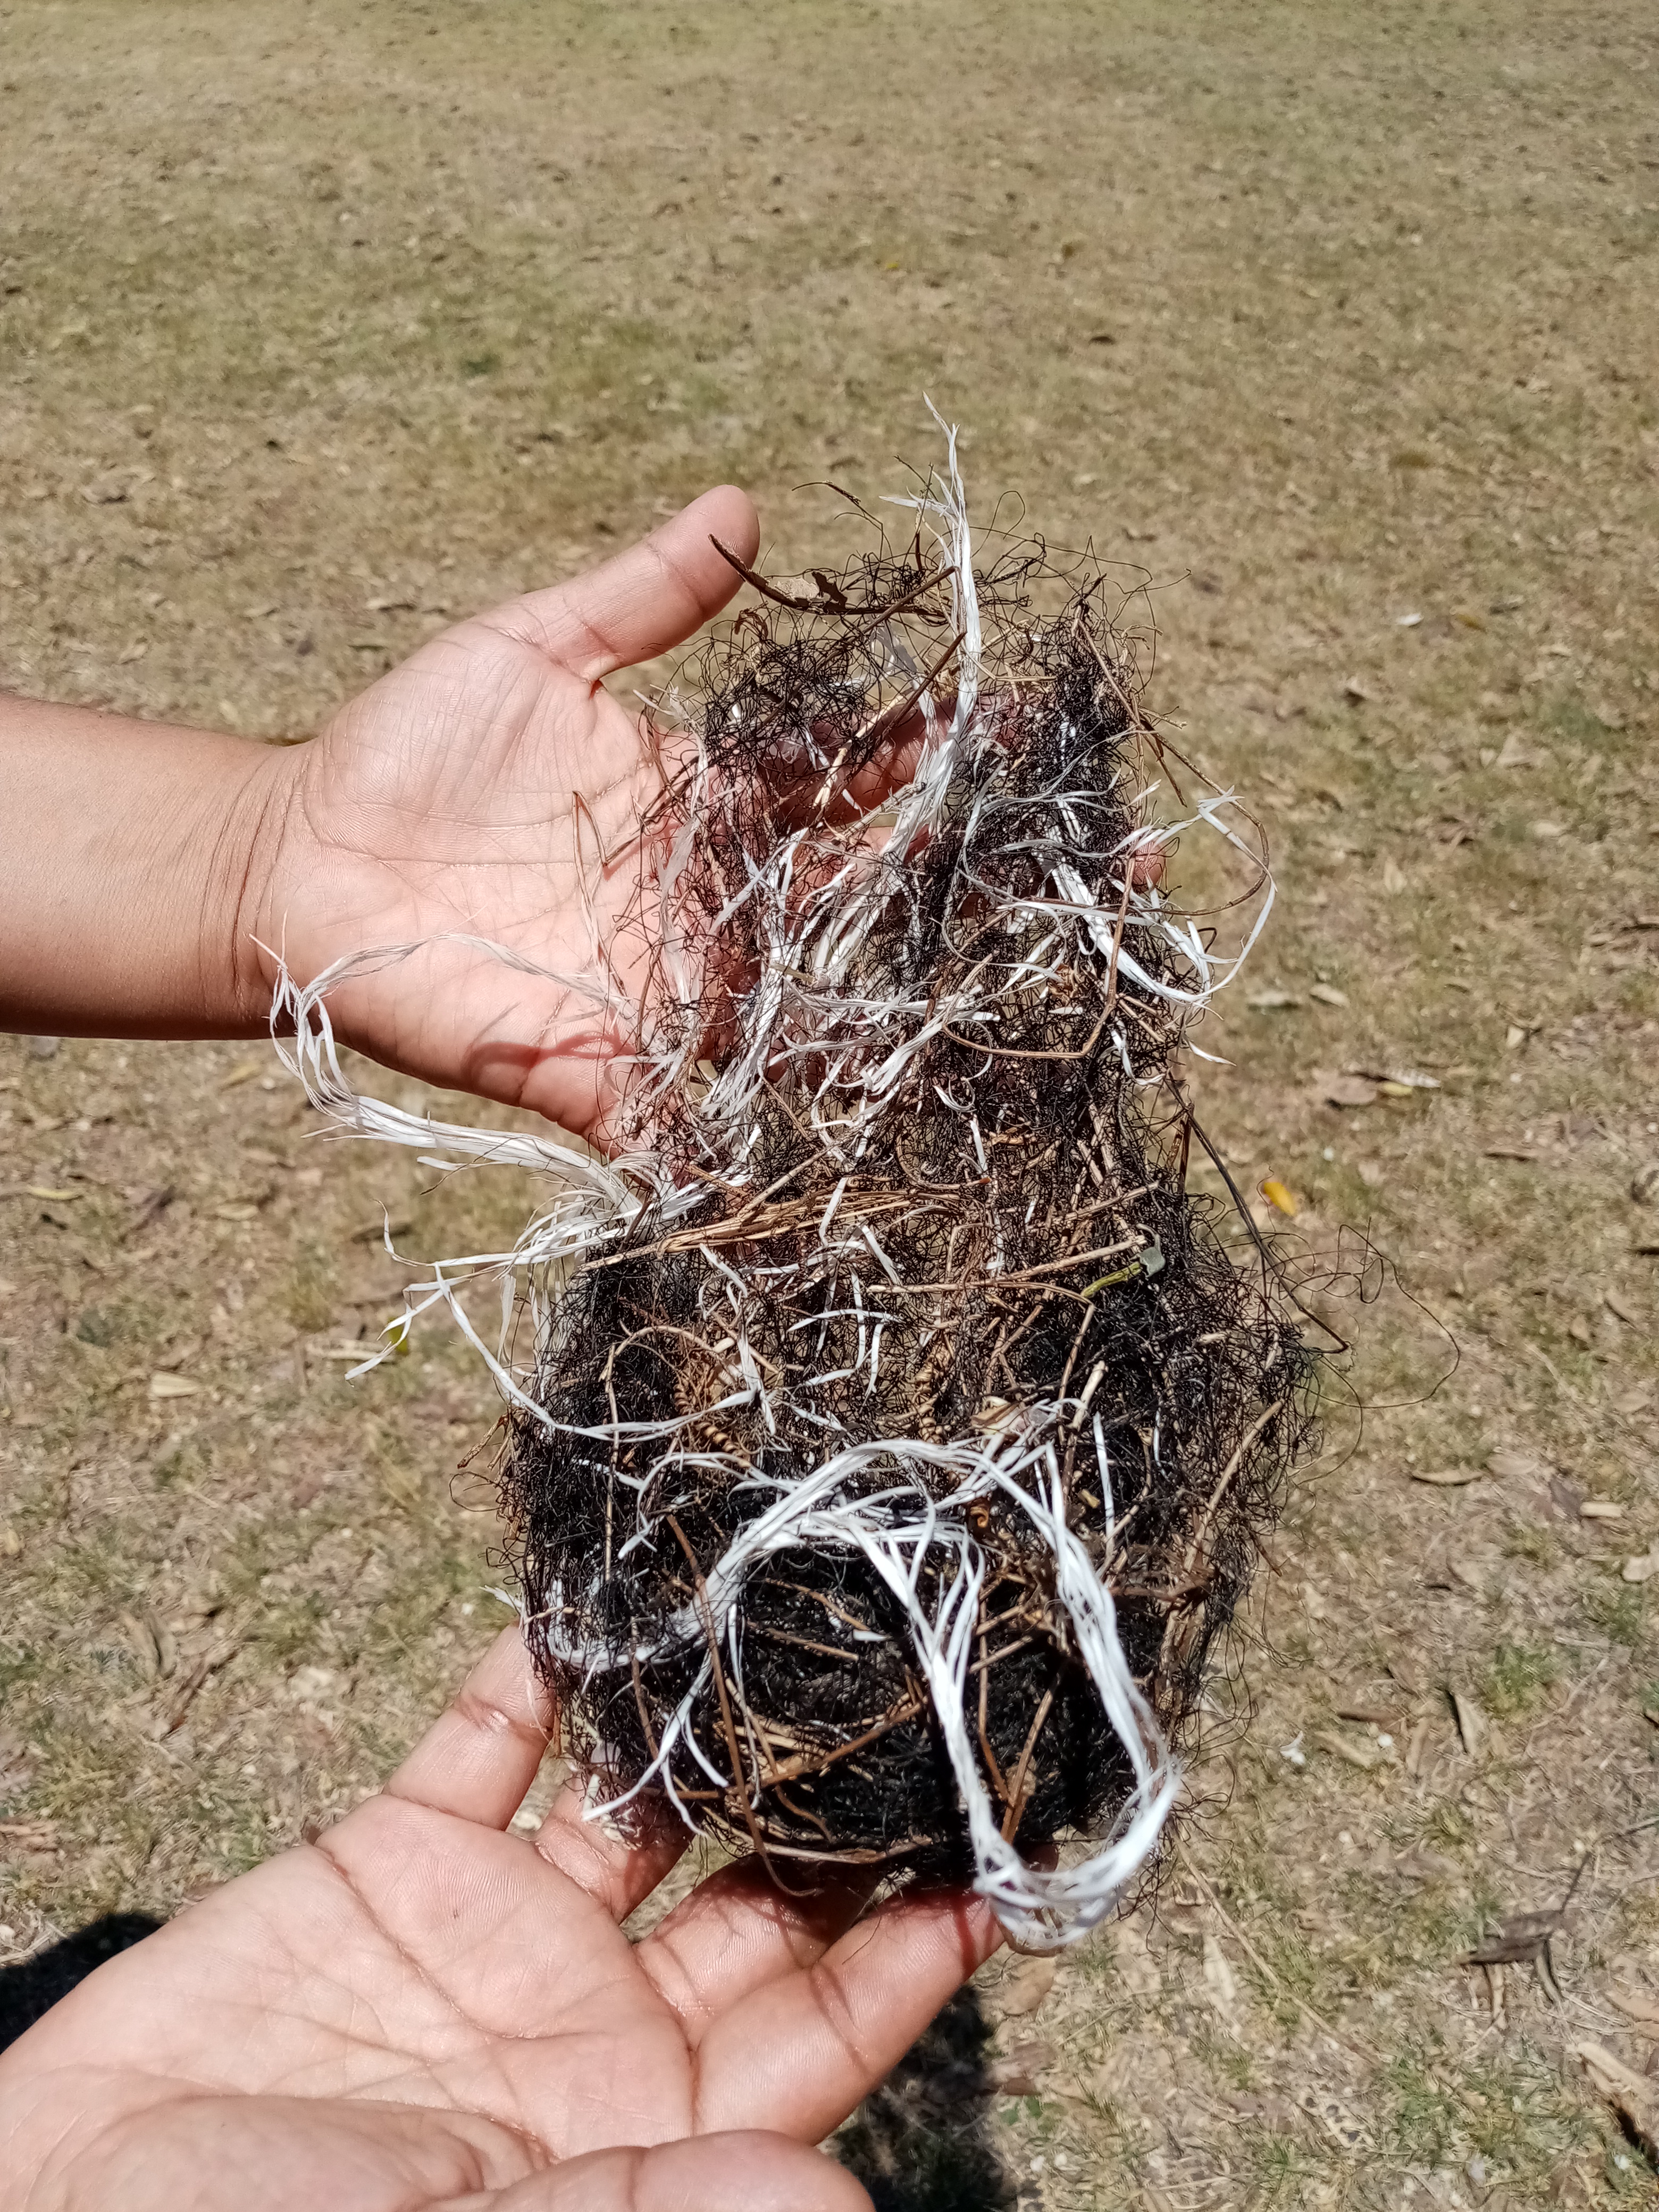 Human hands holding birds nest made of trash